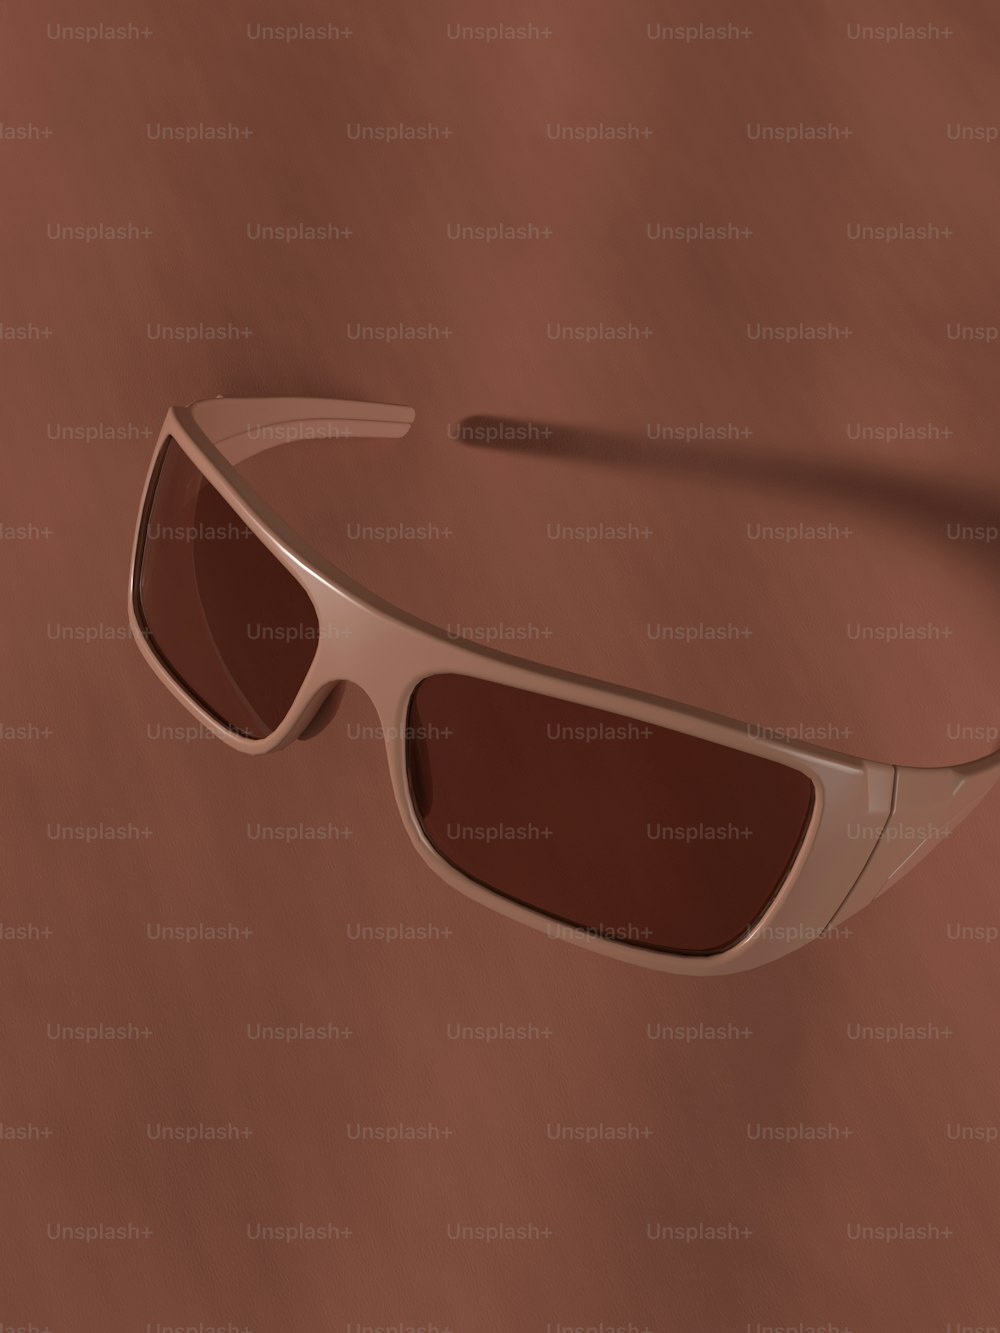 un par de gafas de sol sobre un fondo marrón